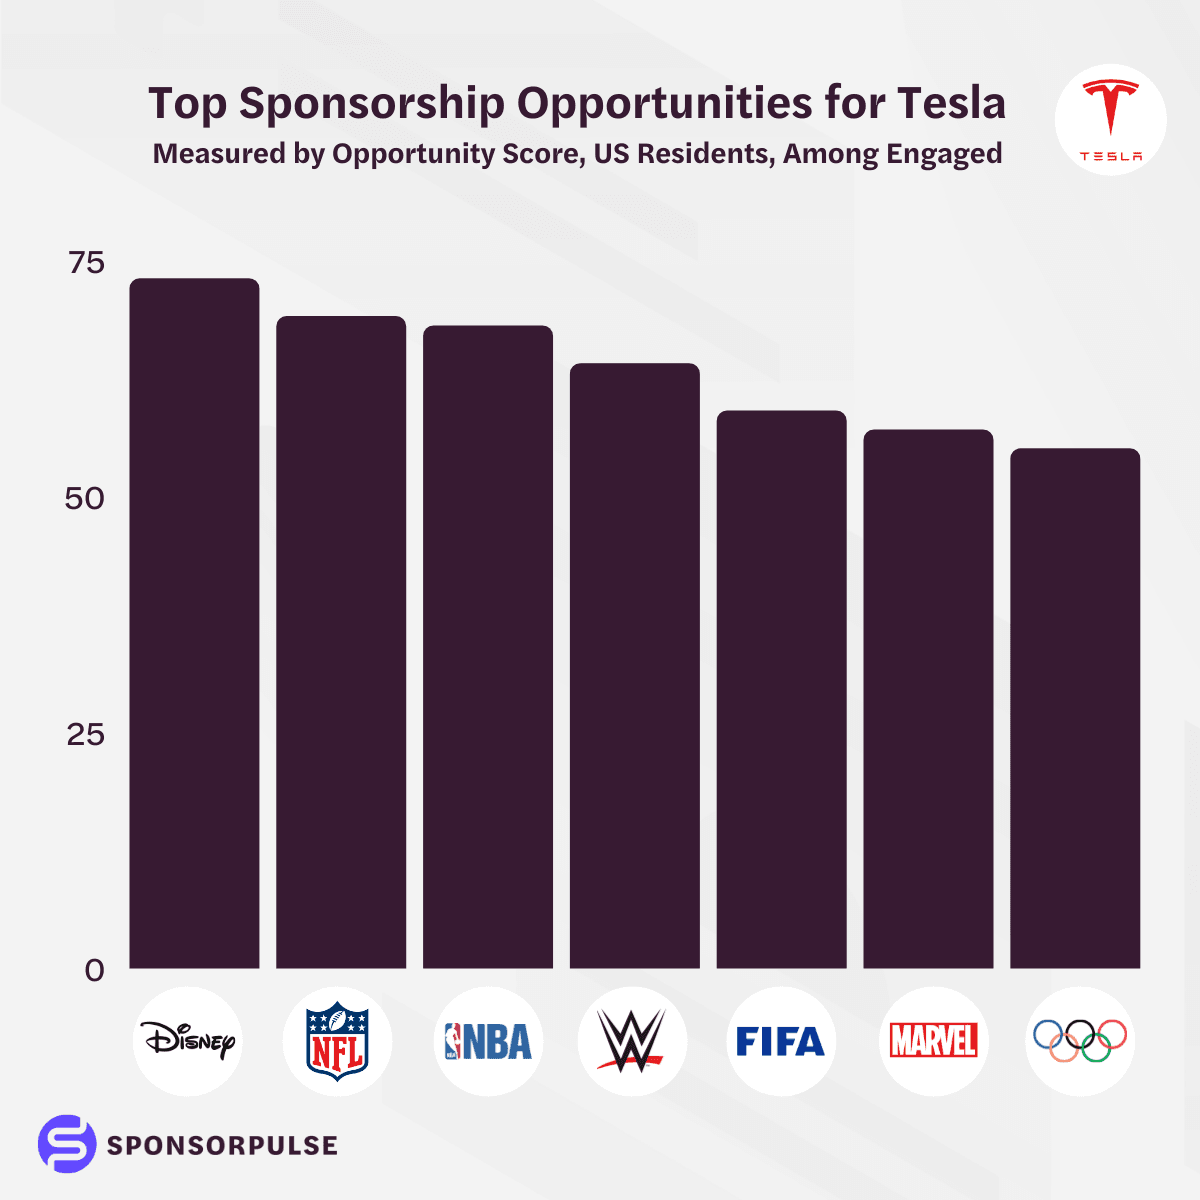 Top Sponsorship Opportunities for Tesla